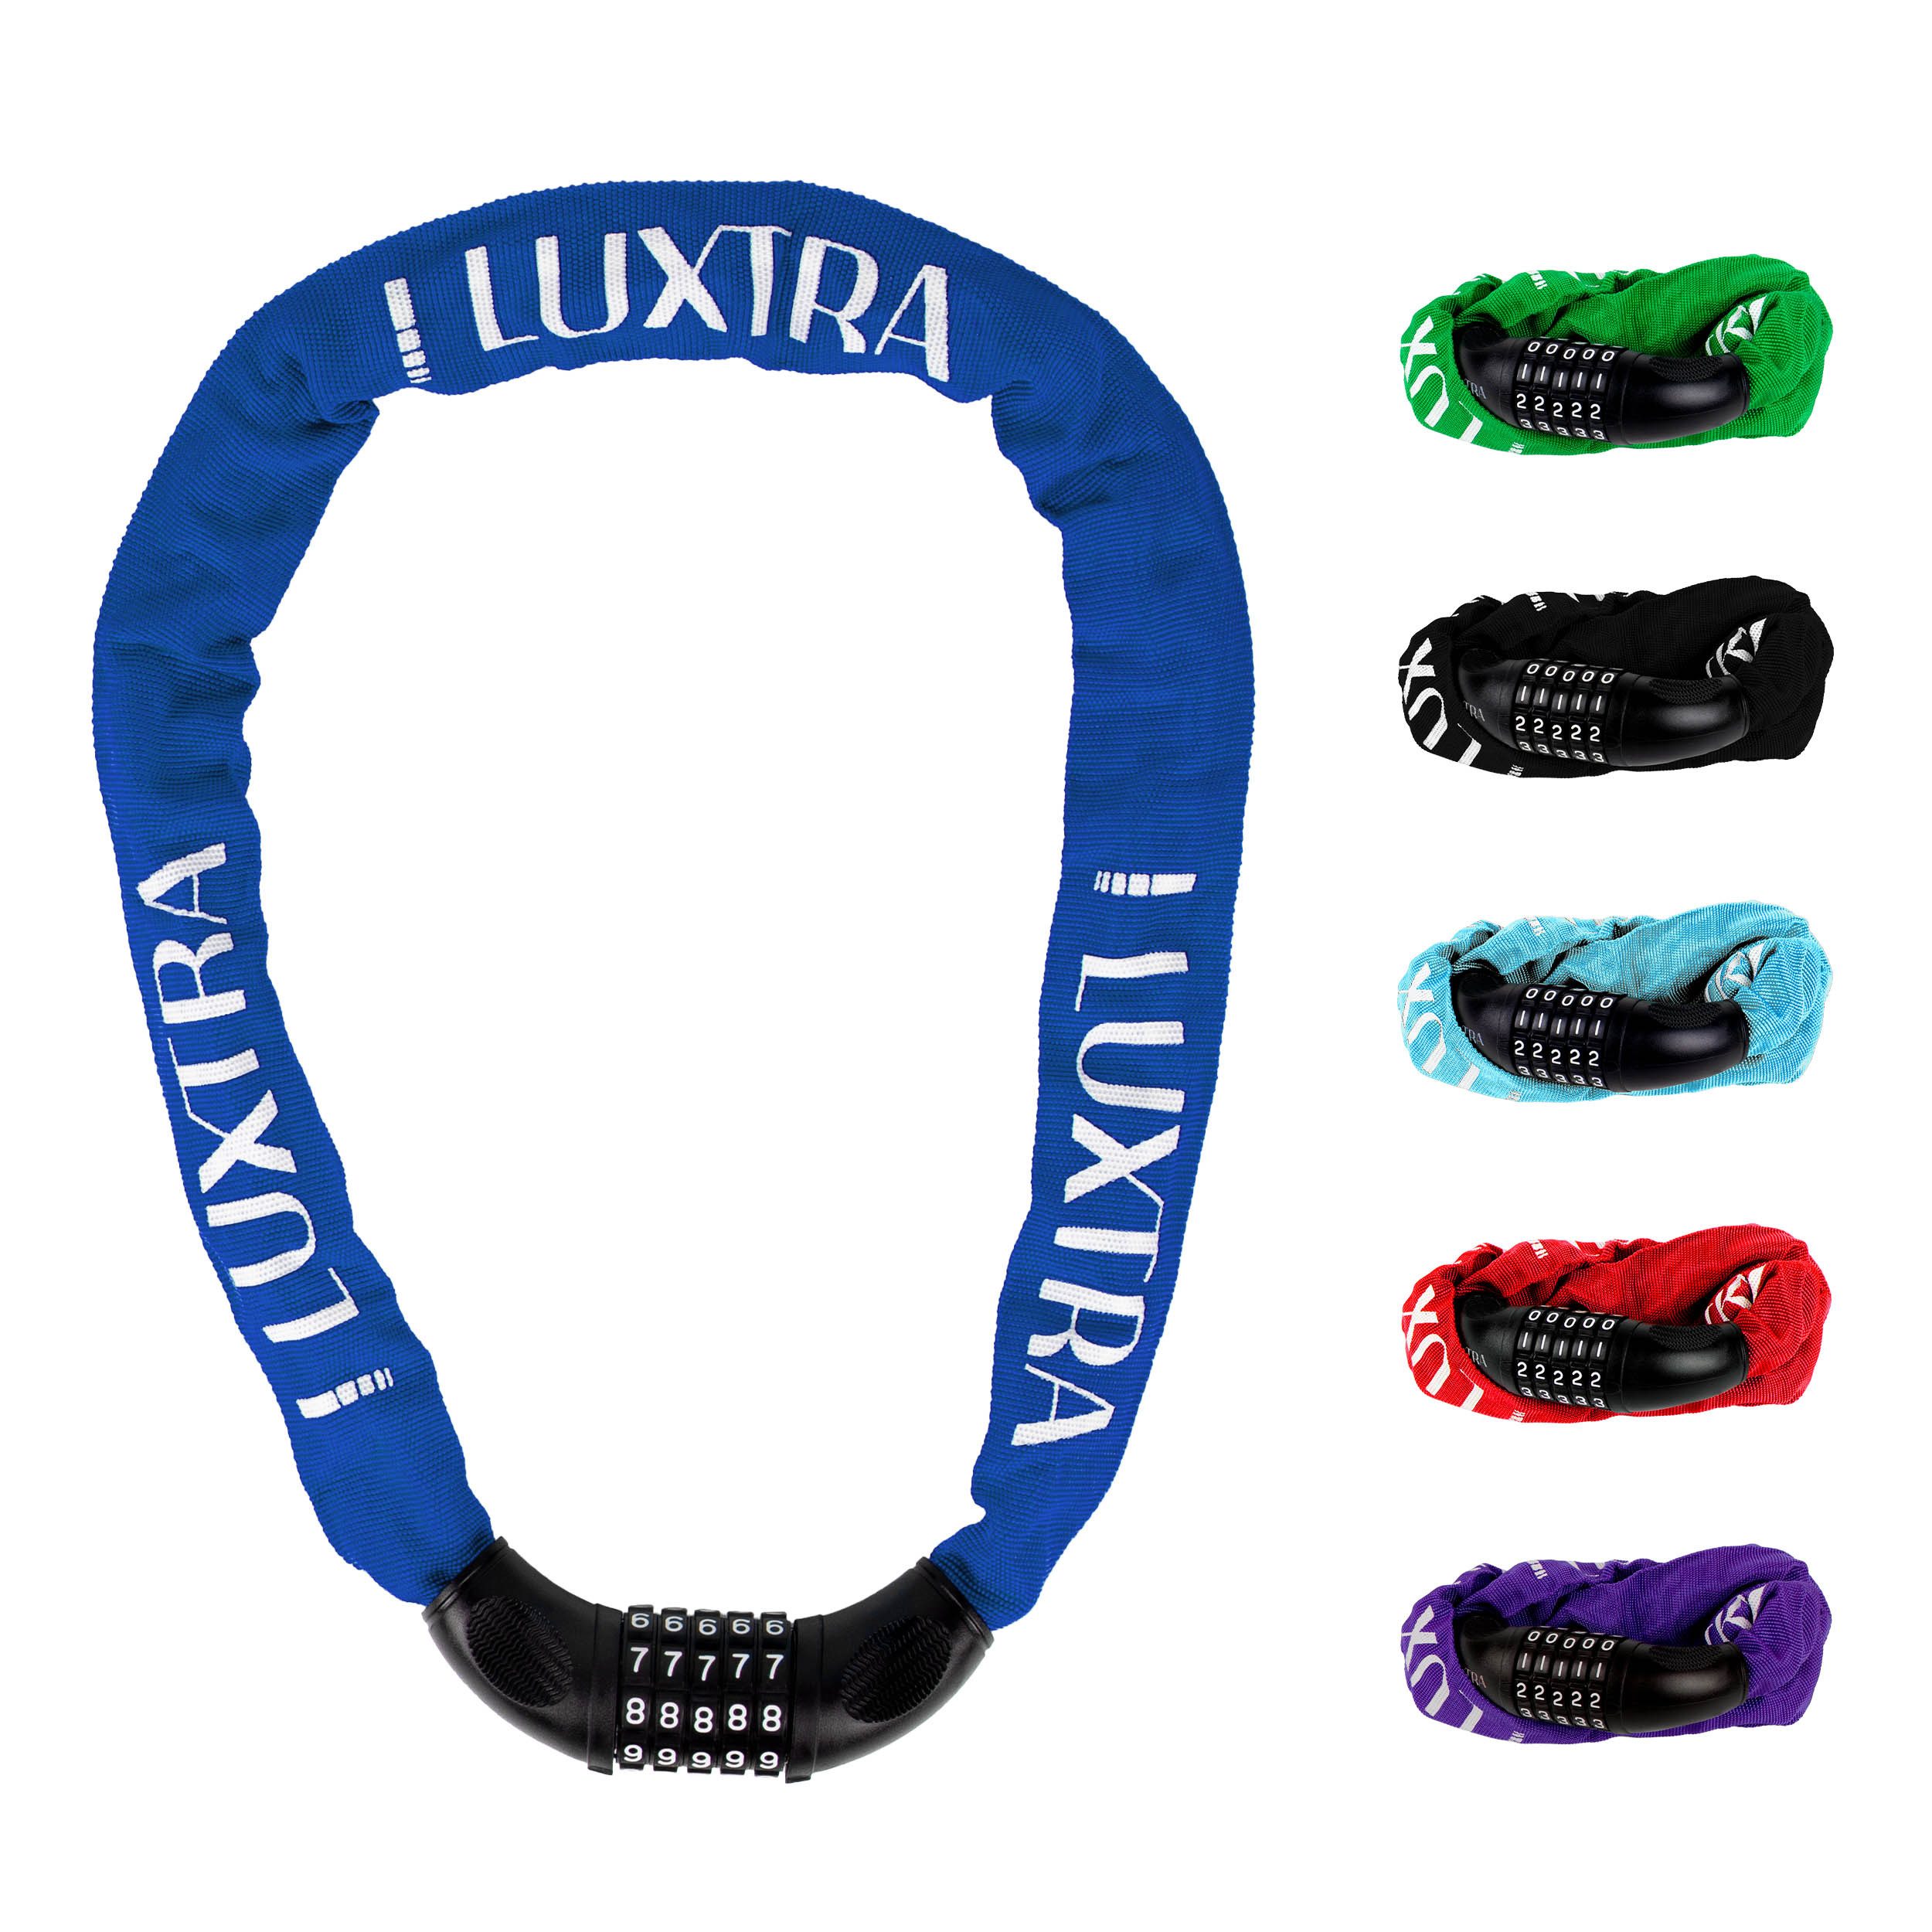 Luxtra Zahlenkettenschloss Fahrradschloss Zahlenkettenschloss mit Sicherheitscode, Blau